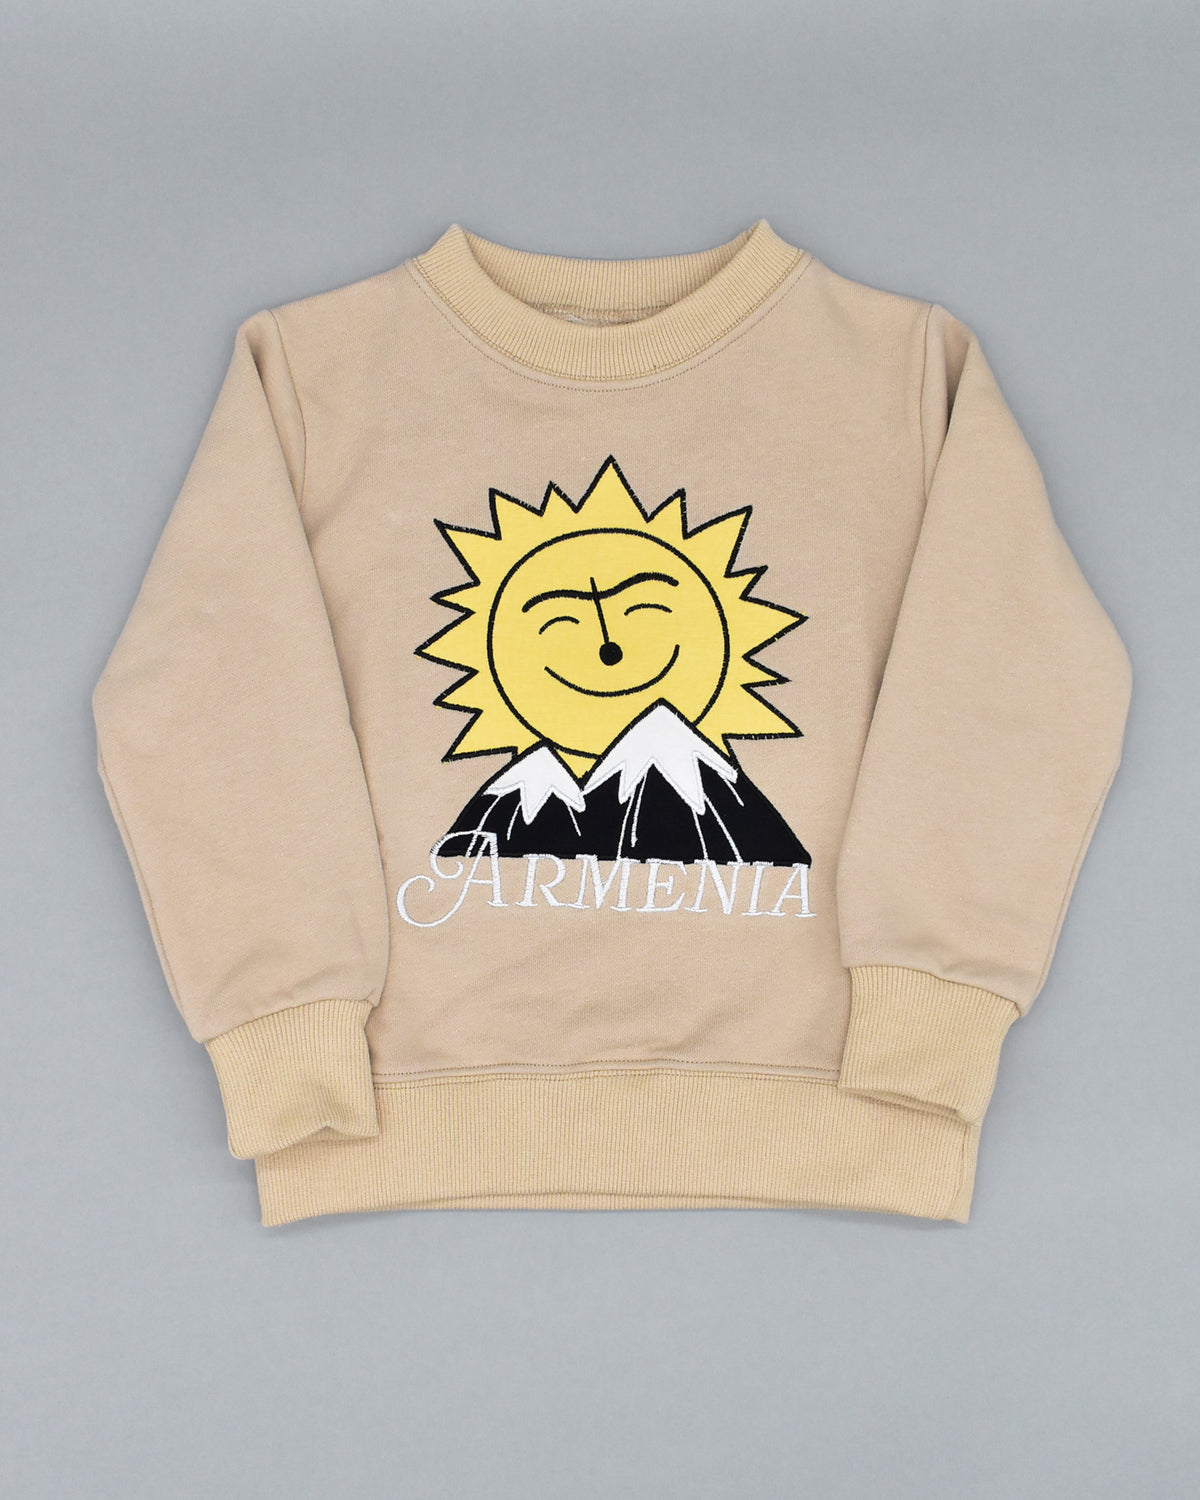 Sunny Armenia Toddler Sweater - 5/6T